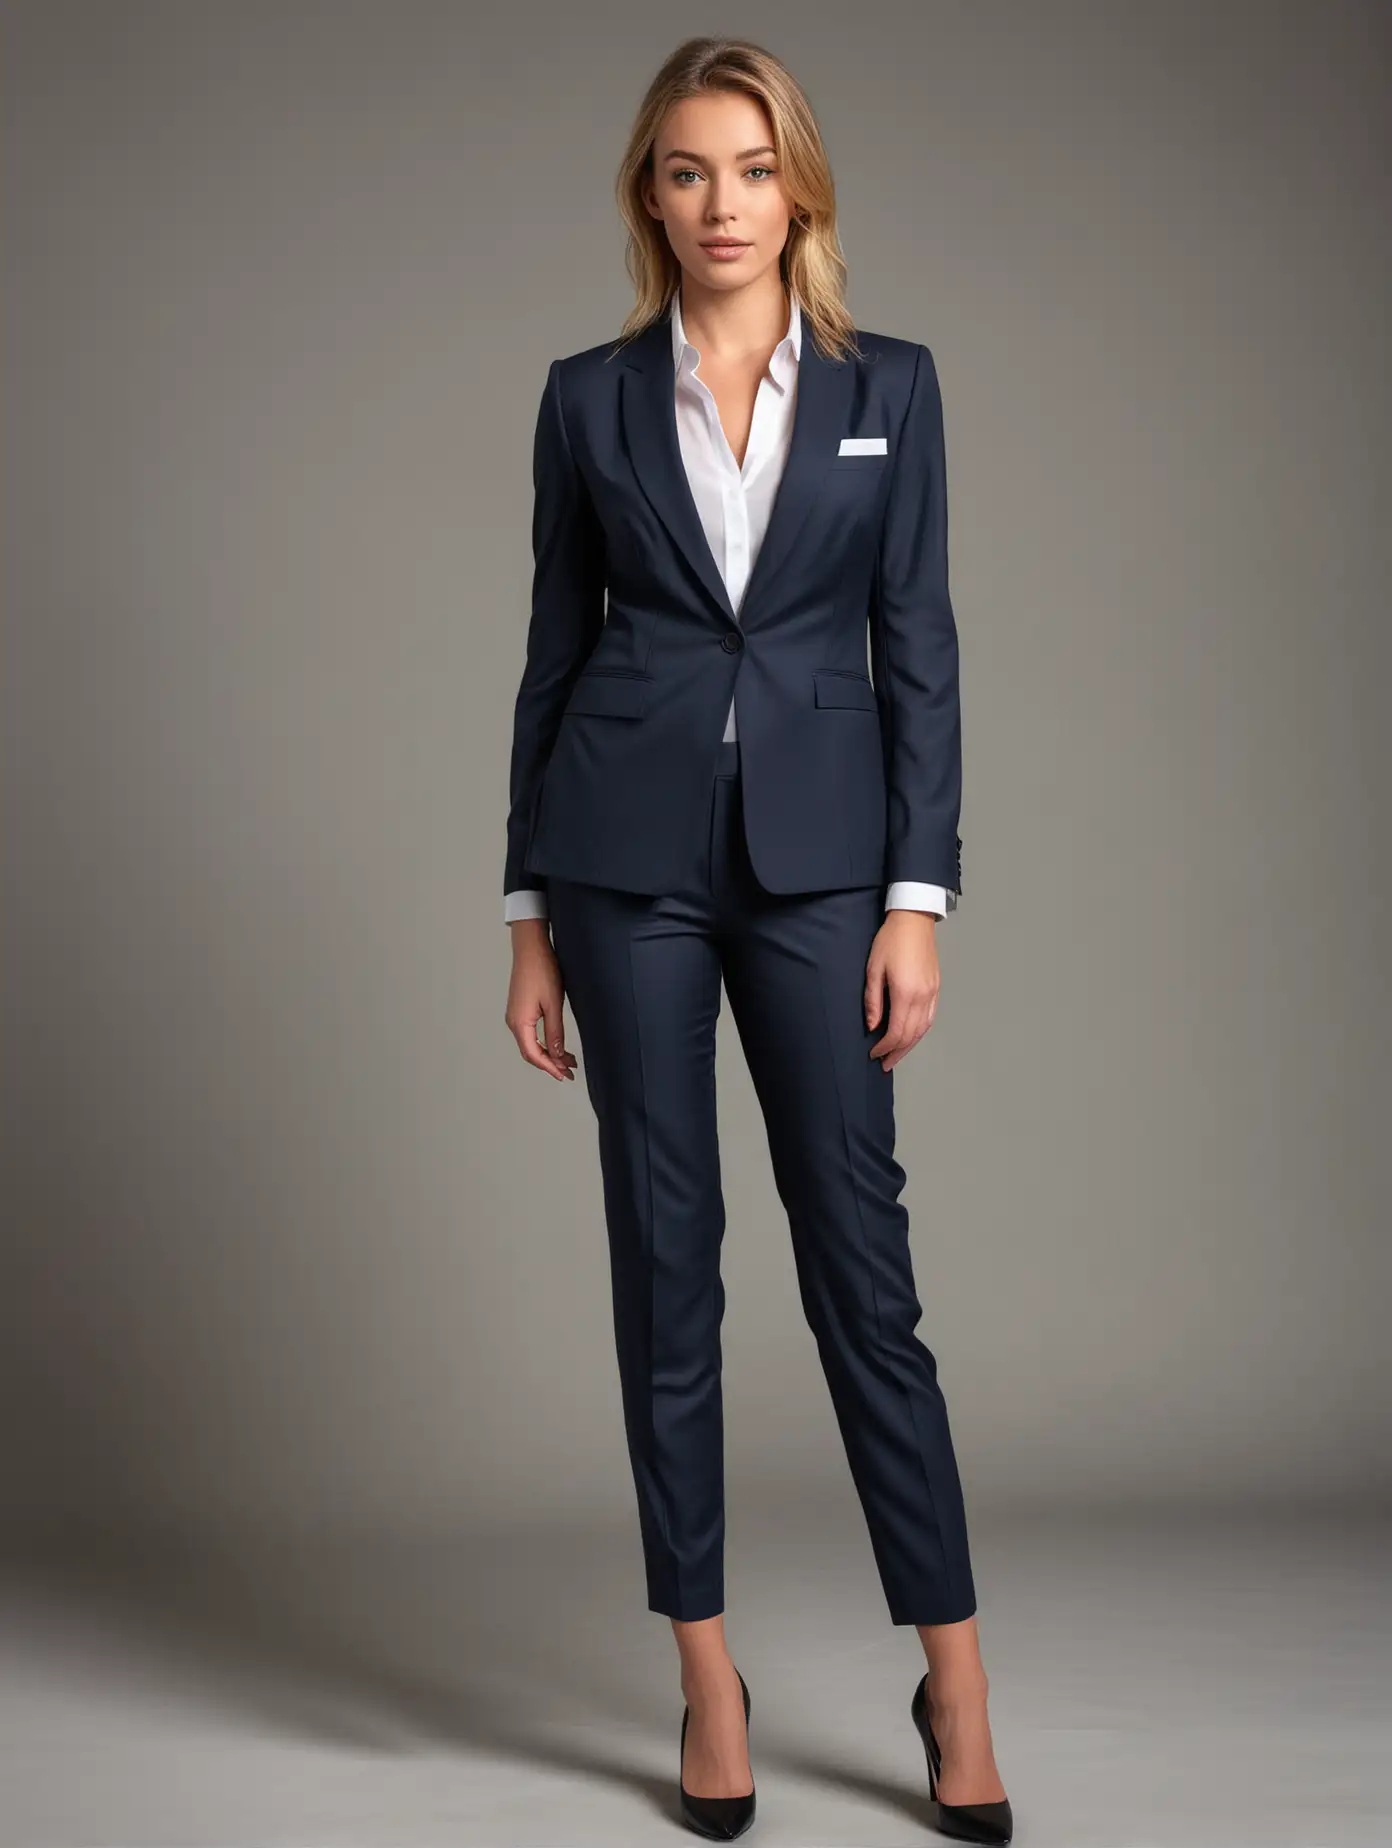 Professional Business Attire Photoshoot Elegant Suits and Confident Faces